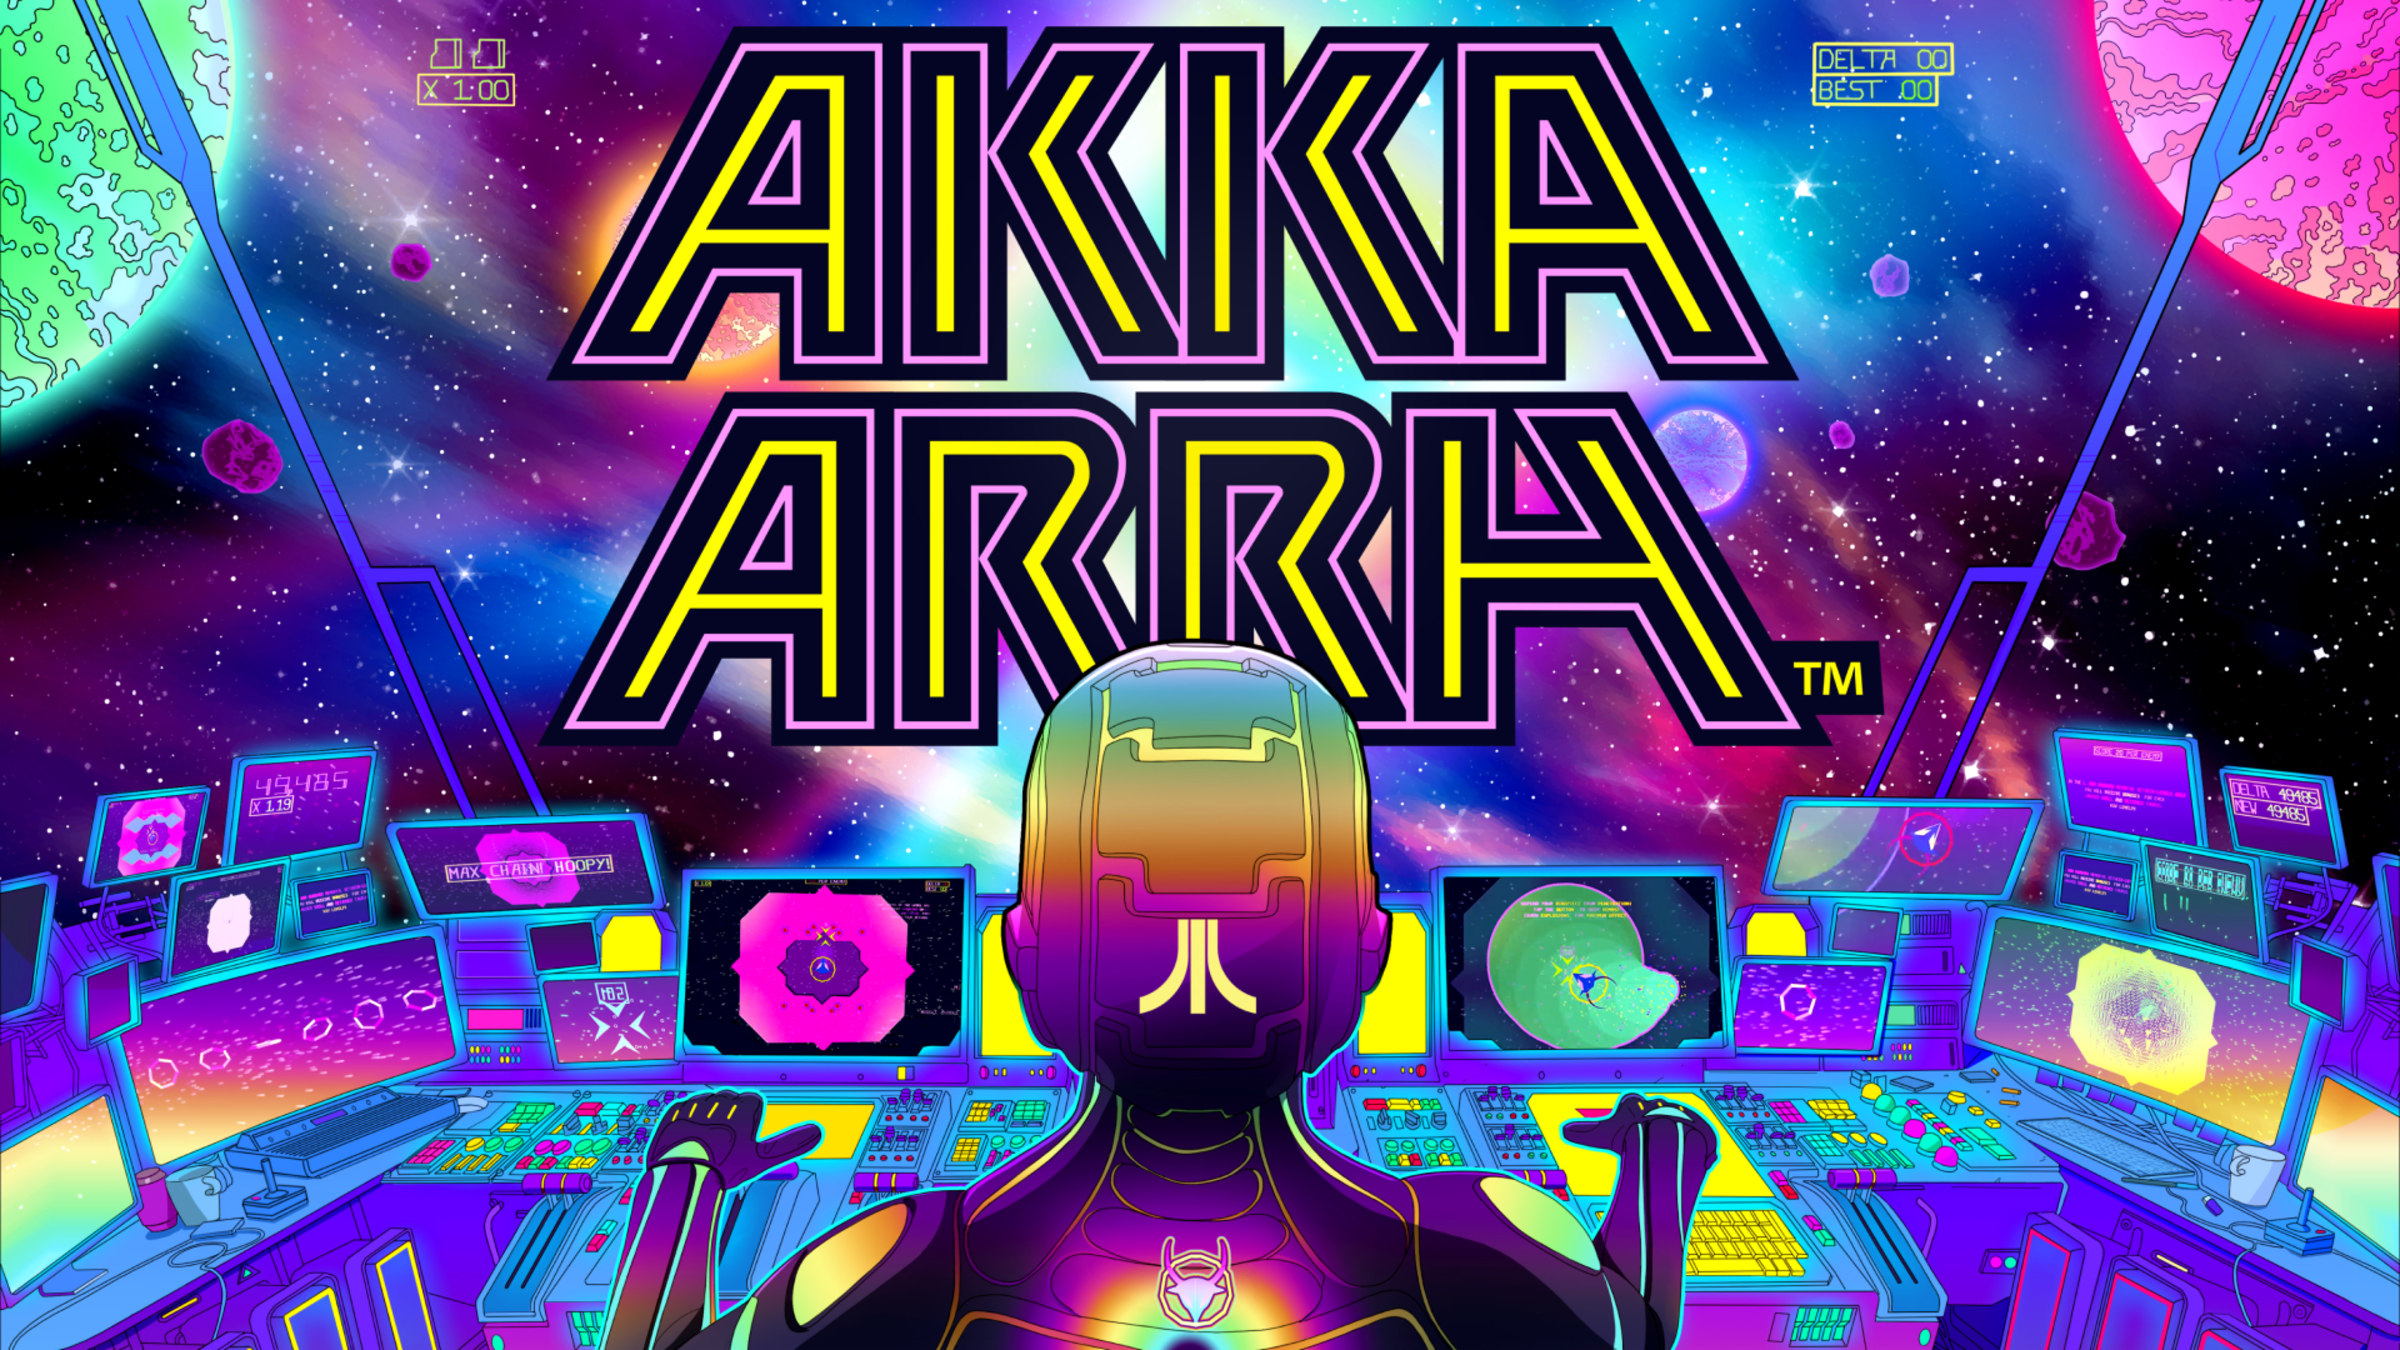 Akka Arrh Full Version Free Download